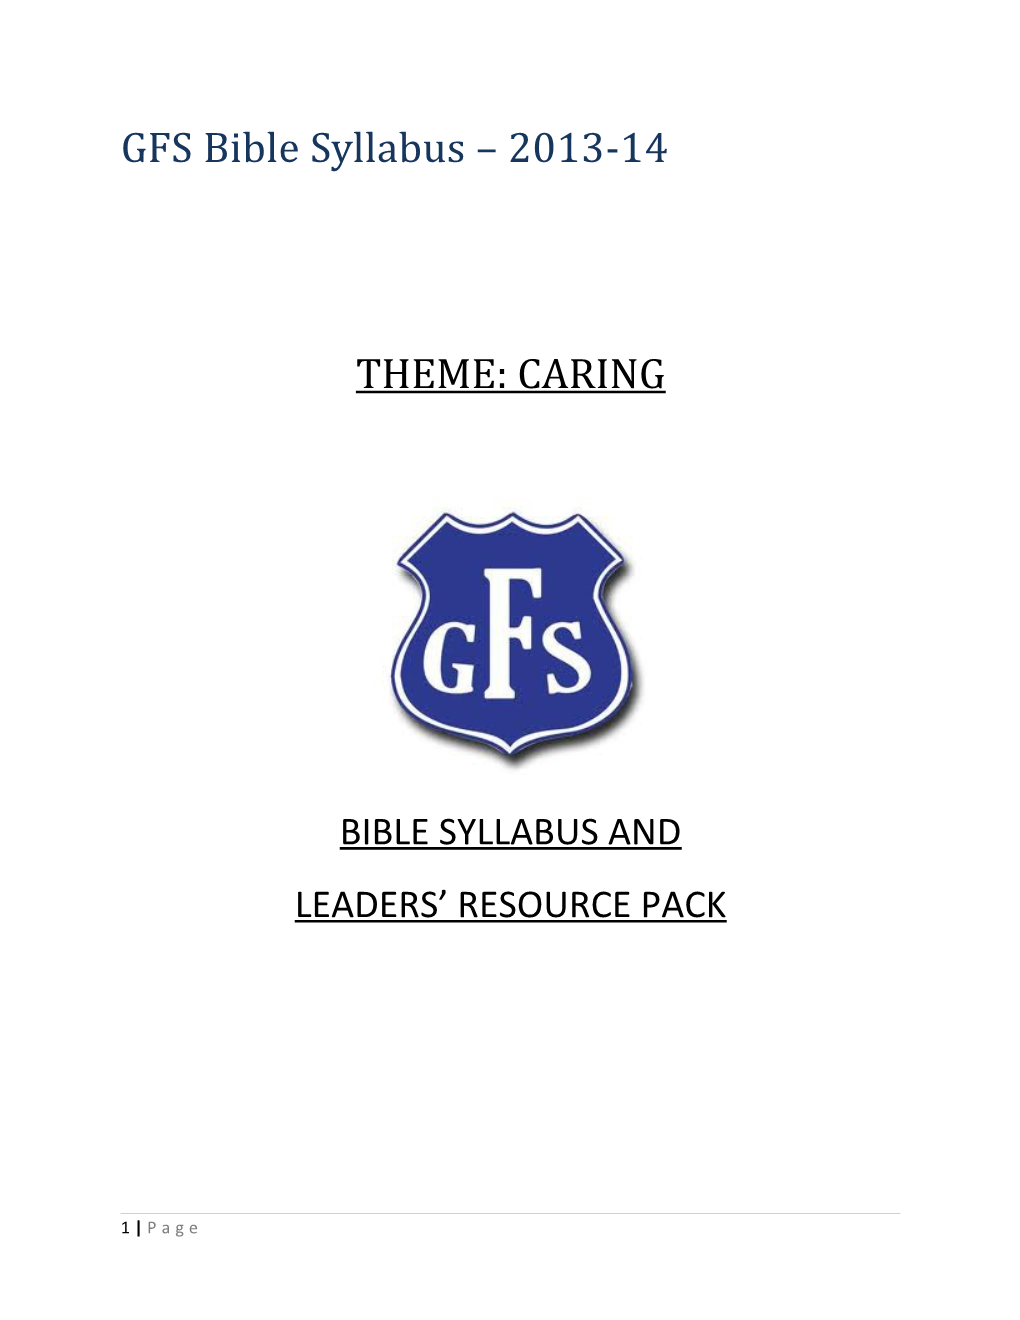 GFS Bible Syllabus 2013-14